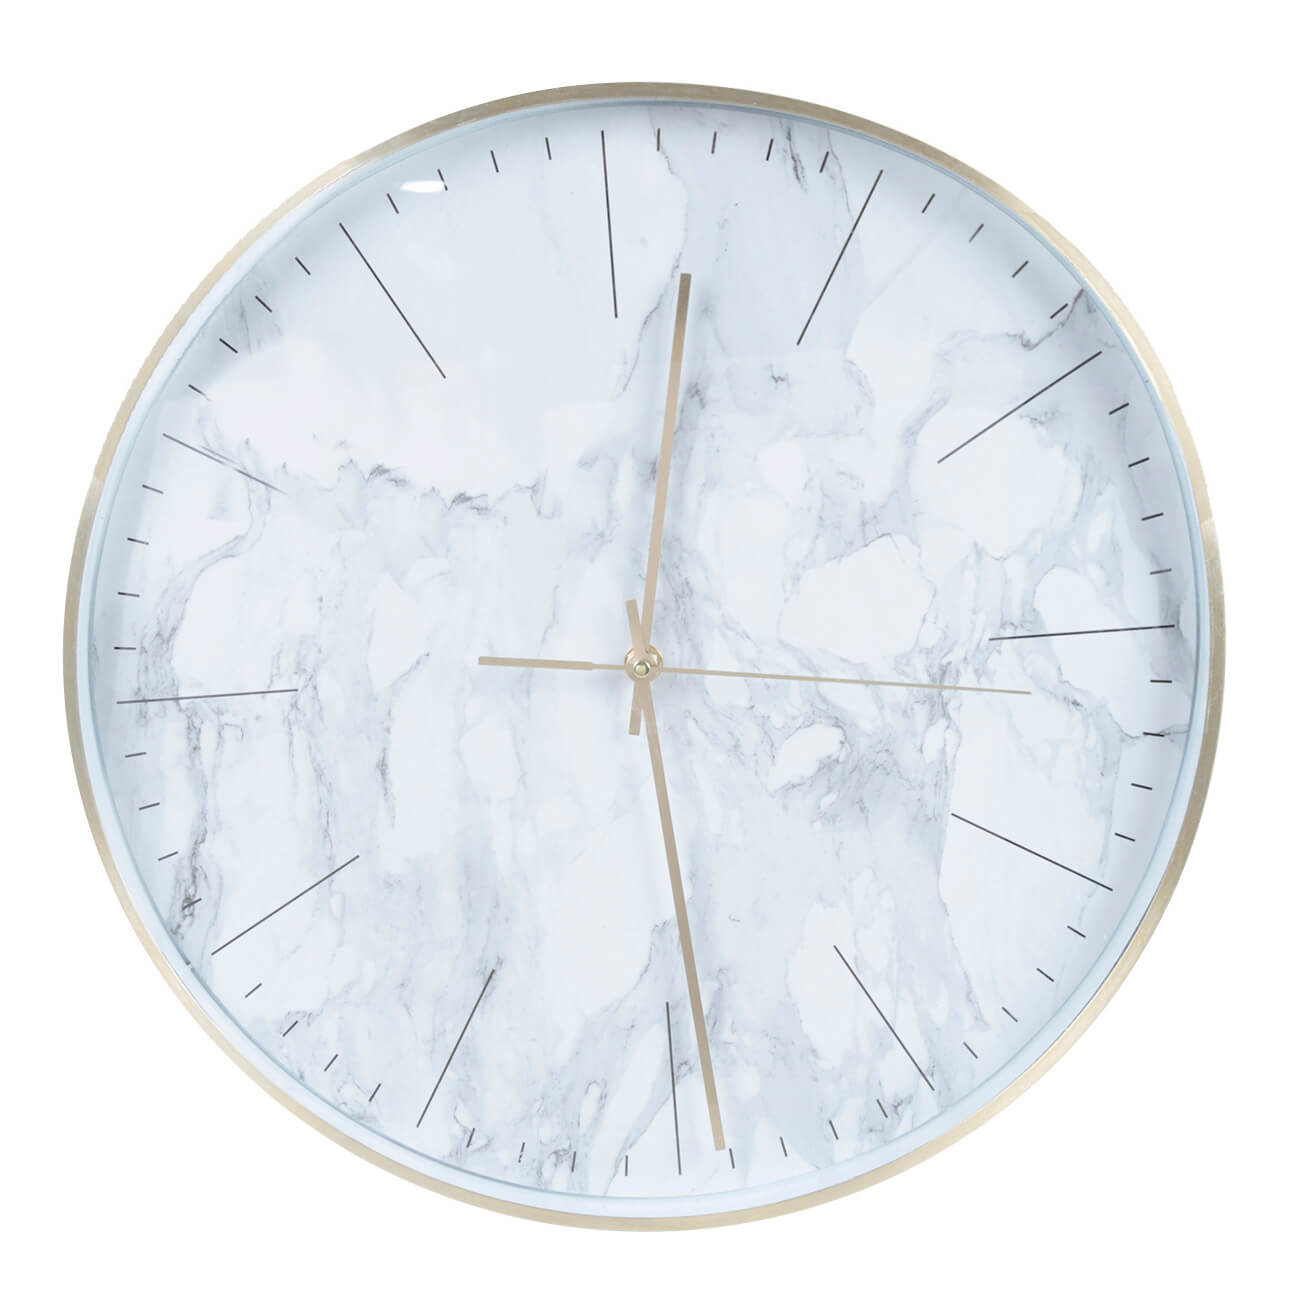 Часы настенные, 40 см, пластик/стекло, круглые, белые, Мрамор, Maniera белые часы rst